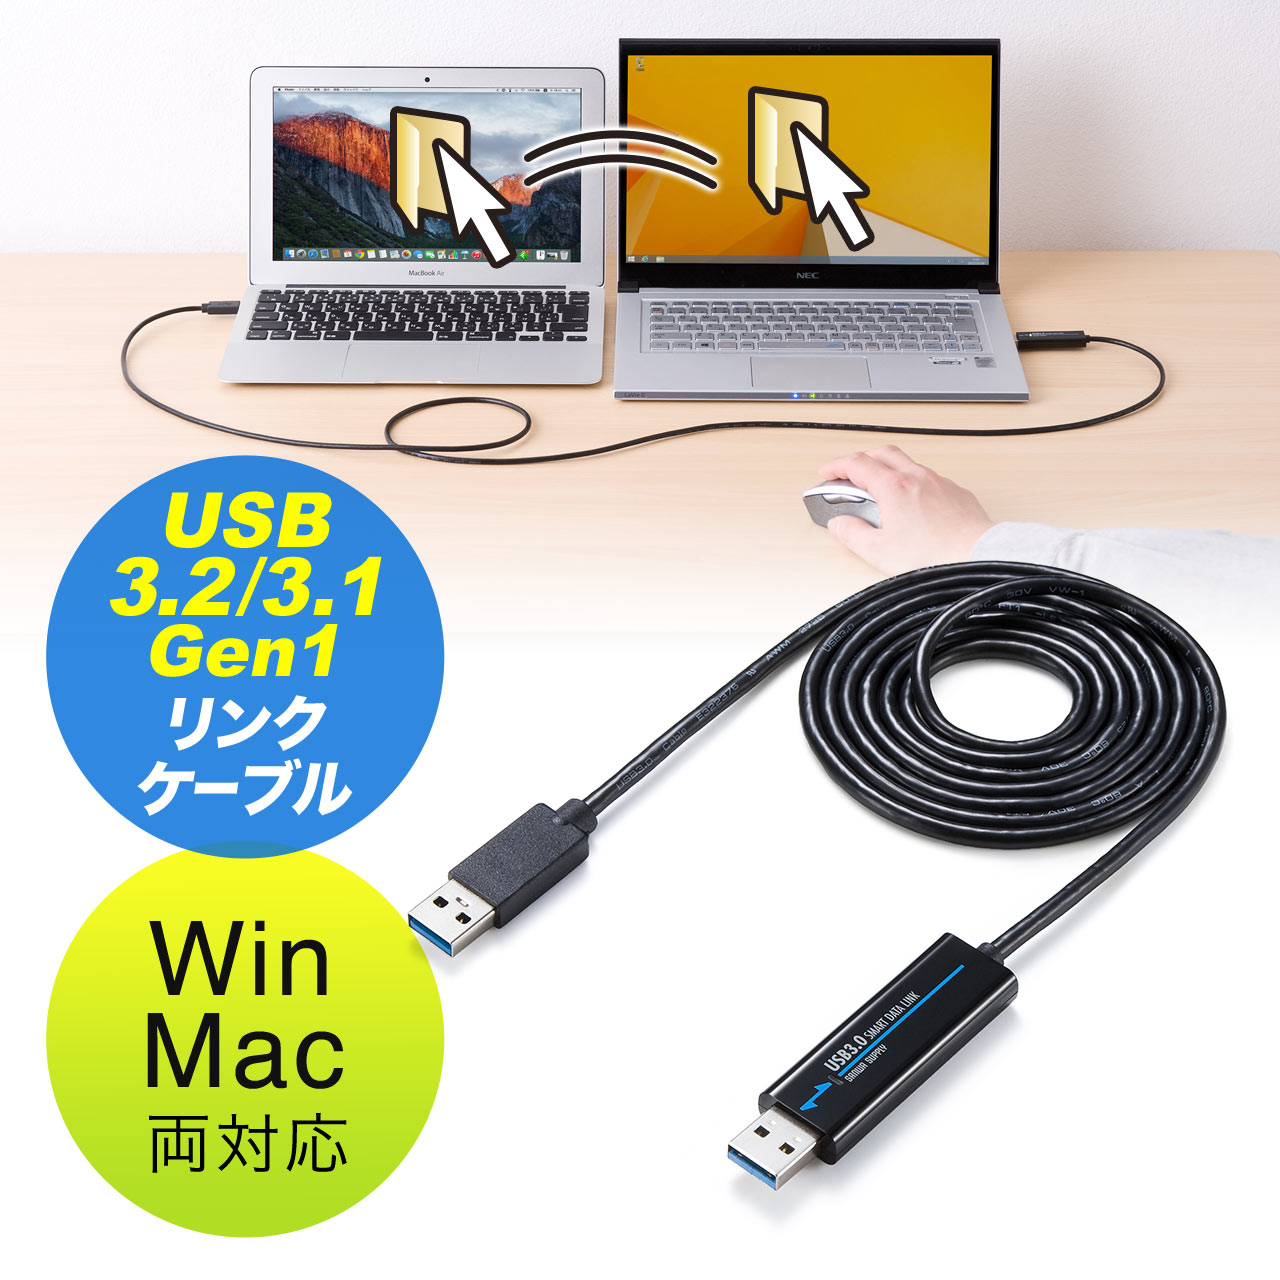 USBリンクケーブル USB3.2 Gen1 PC間 高速データ転送 データ移行 Windows Mac両対応 Type-Cコネクタ EZ5-USB070